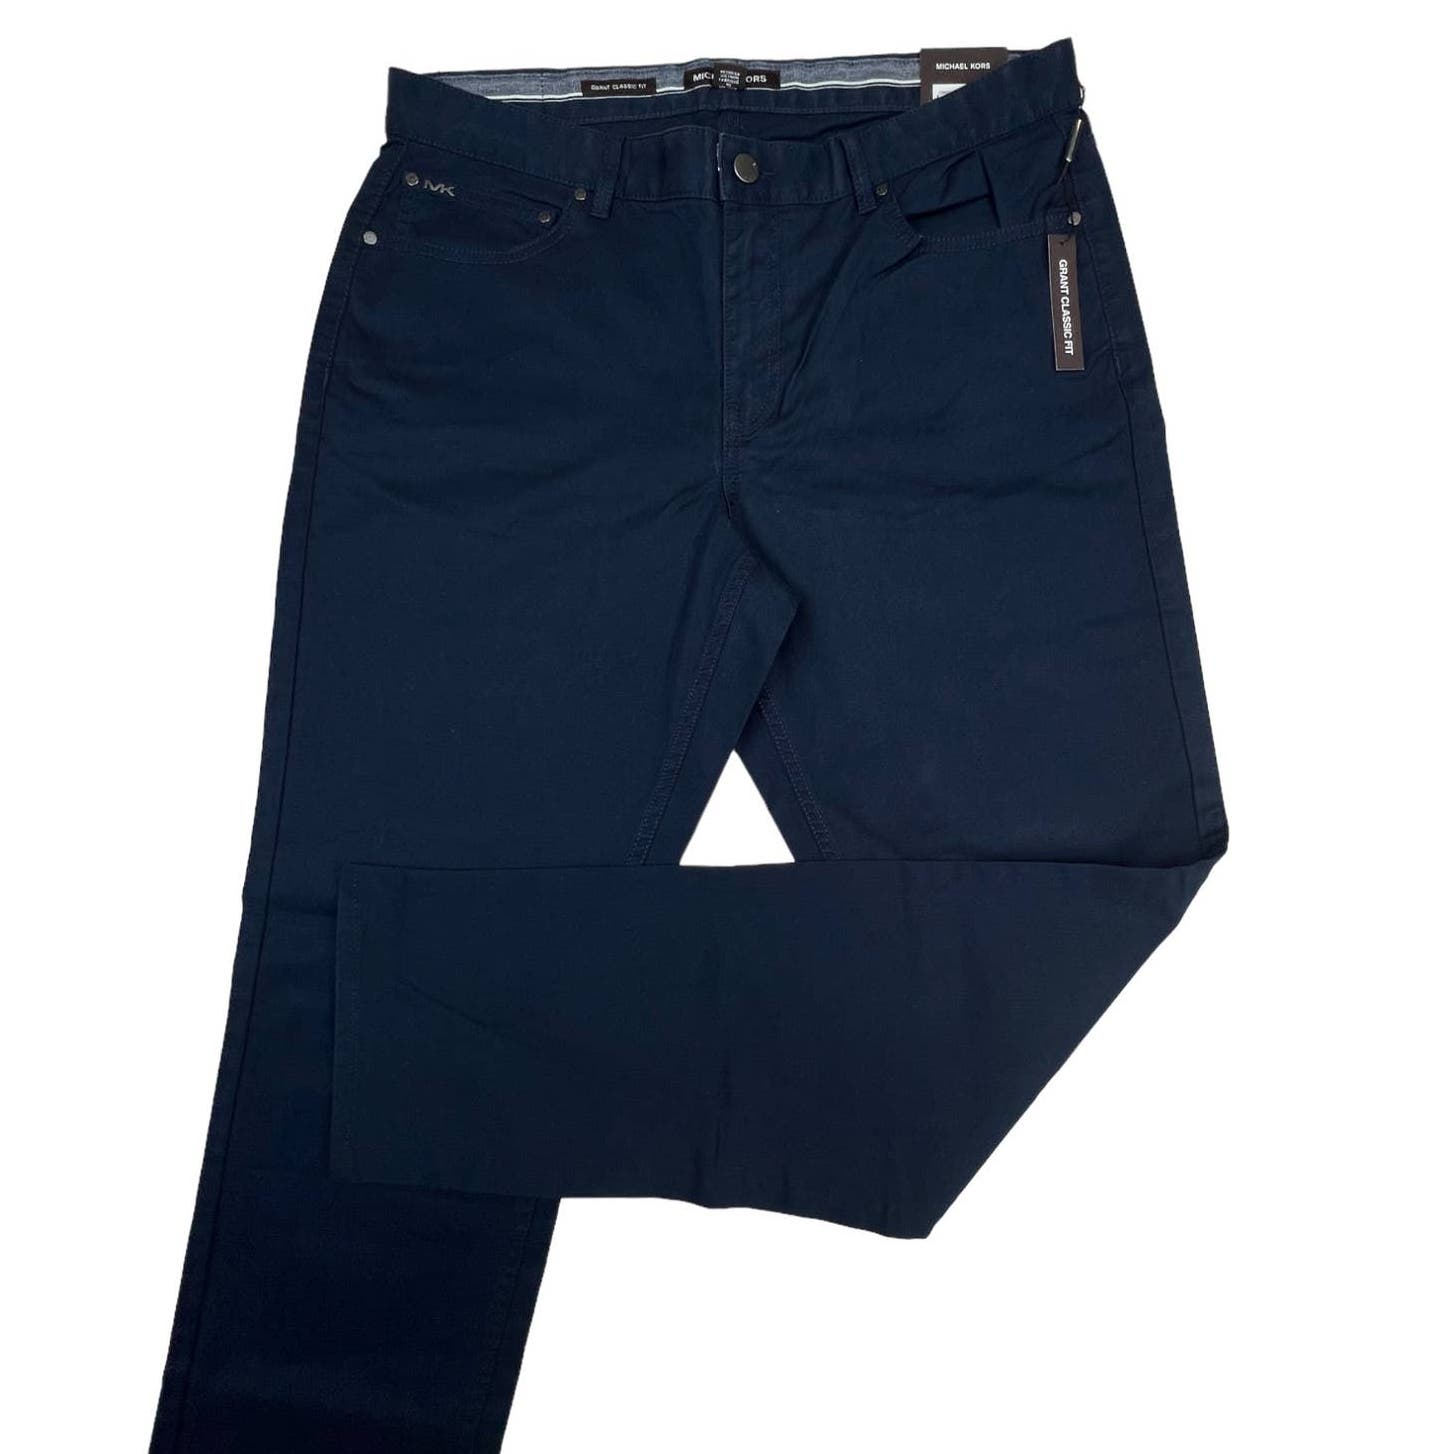 Michael Kors Men Midnight Blue Pants US 34x32 Classic Fit Slim